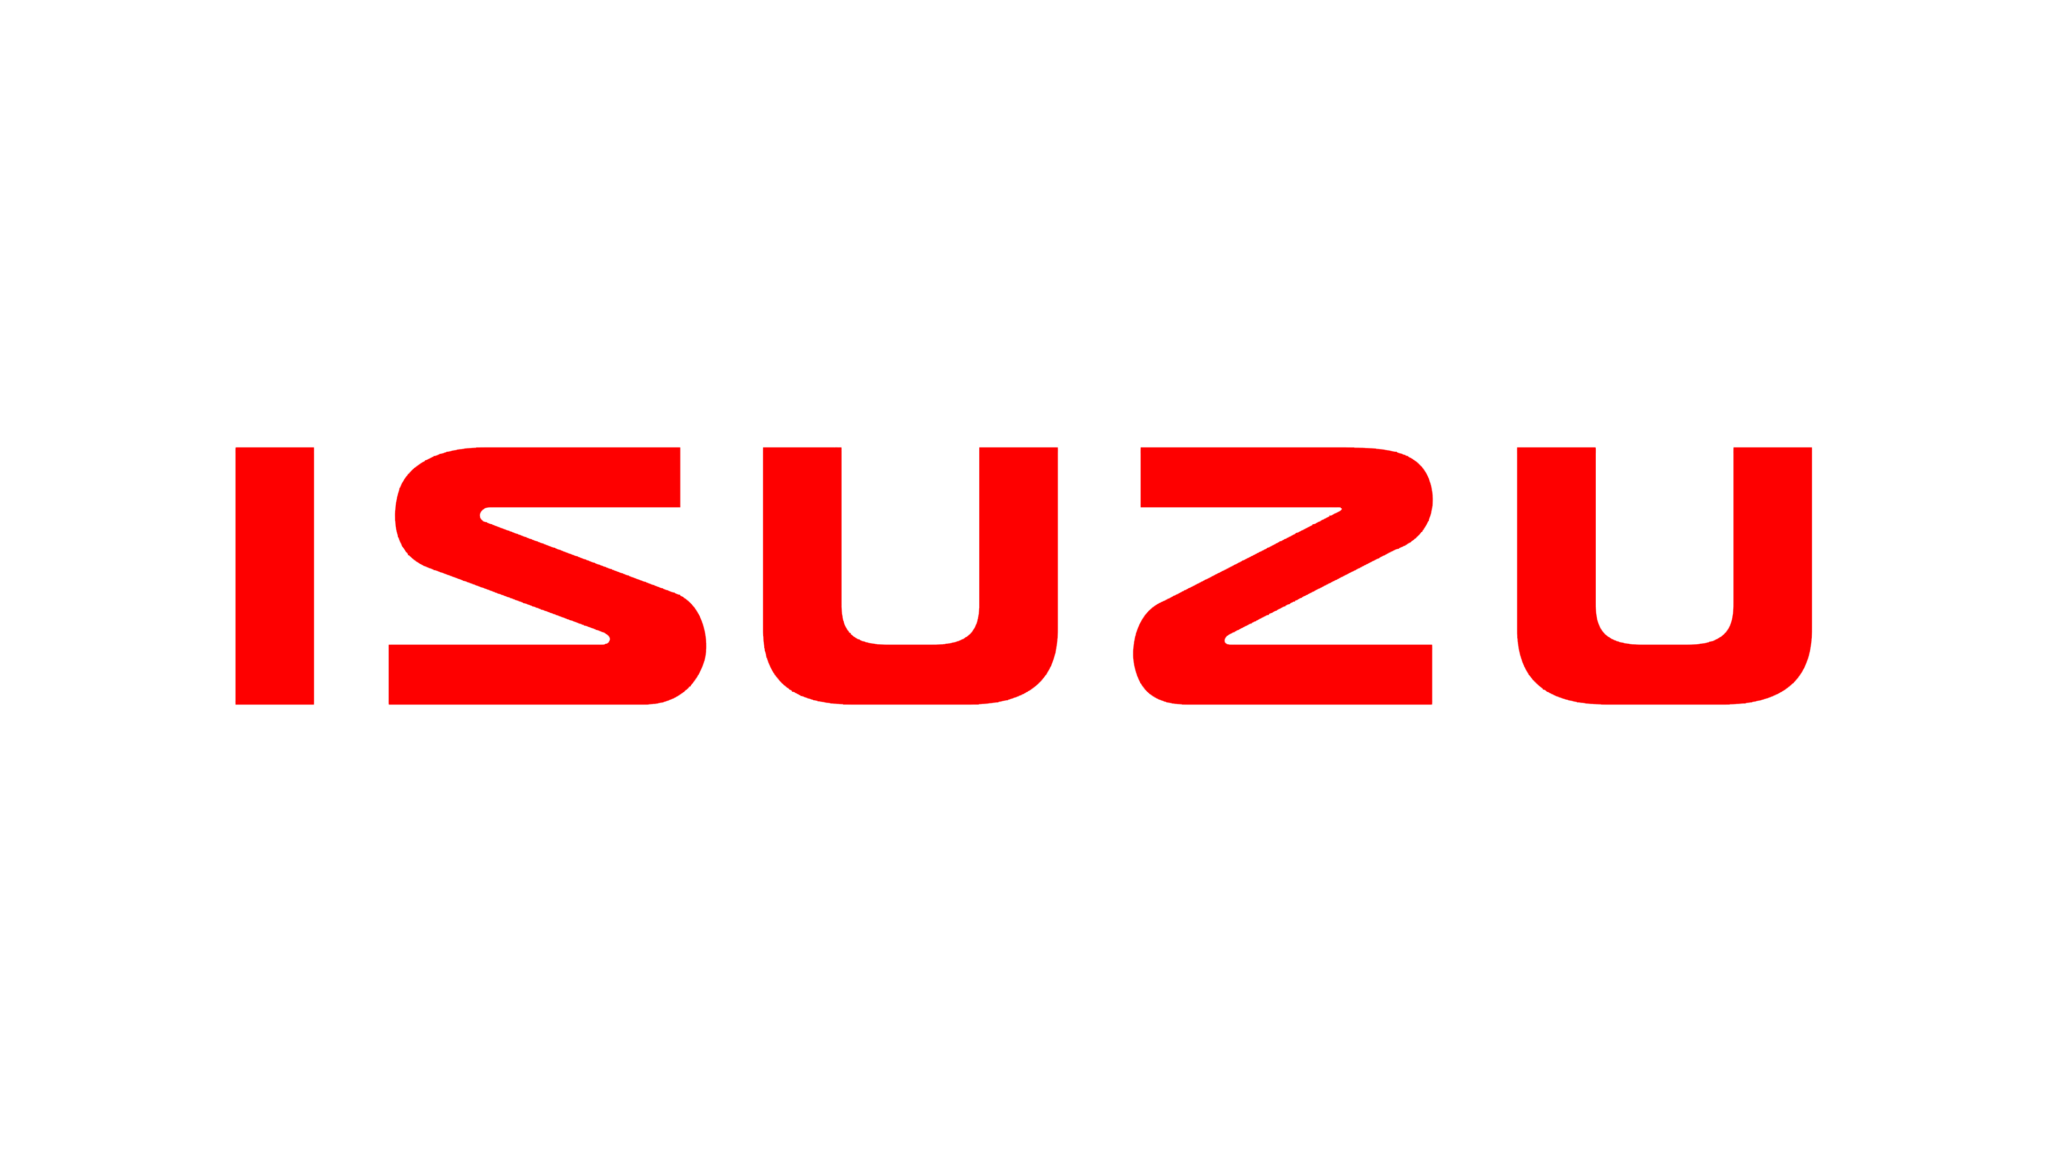 Isuzu_logo_PNG1